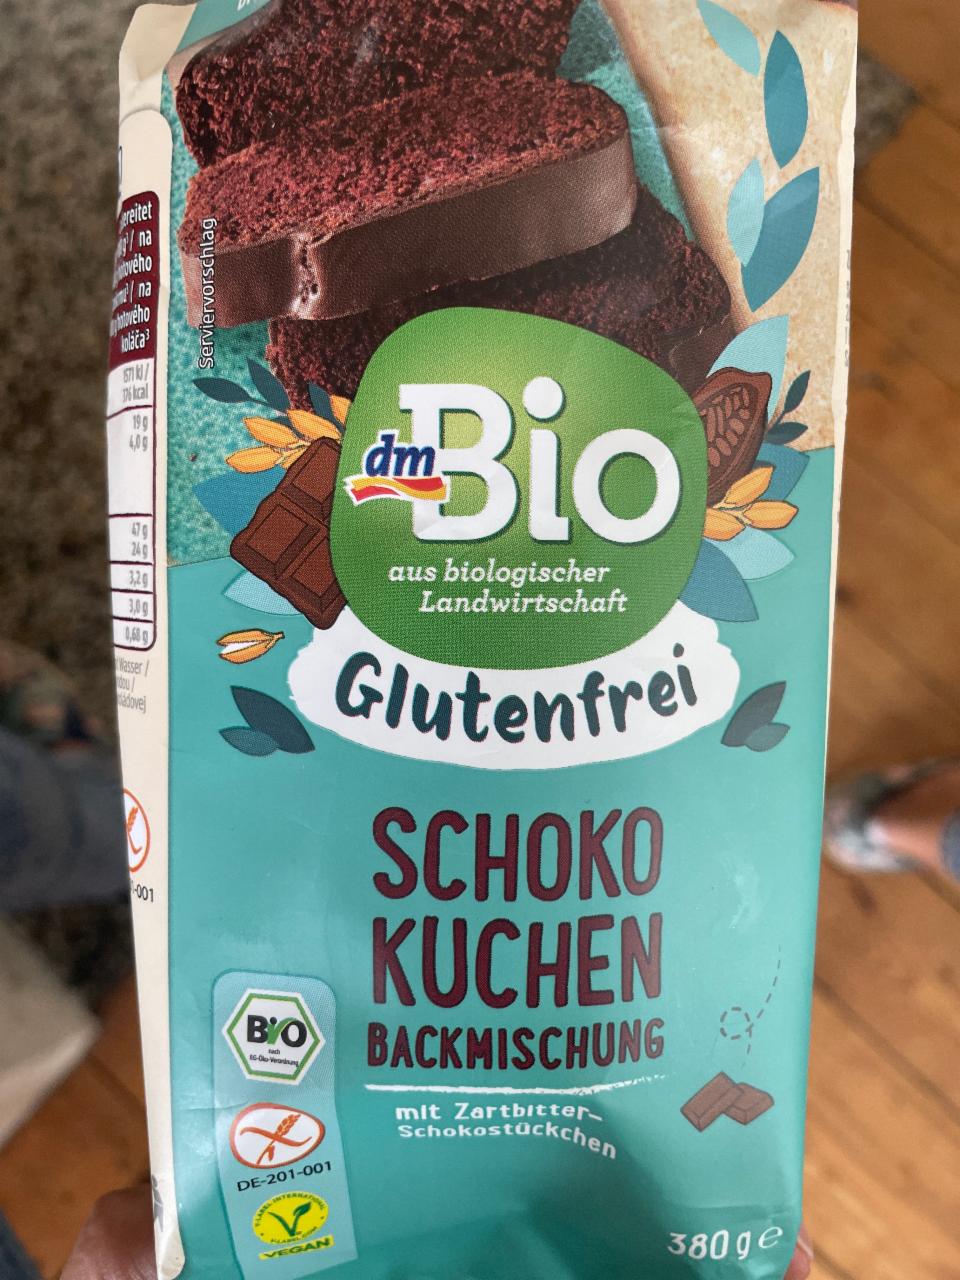 Fotografie - Schoko Kuchen Backmischung Glutenfrei dmBio